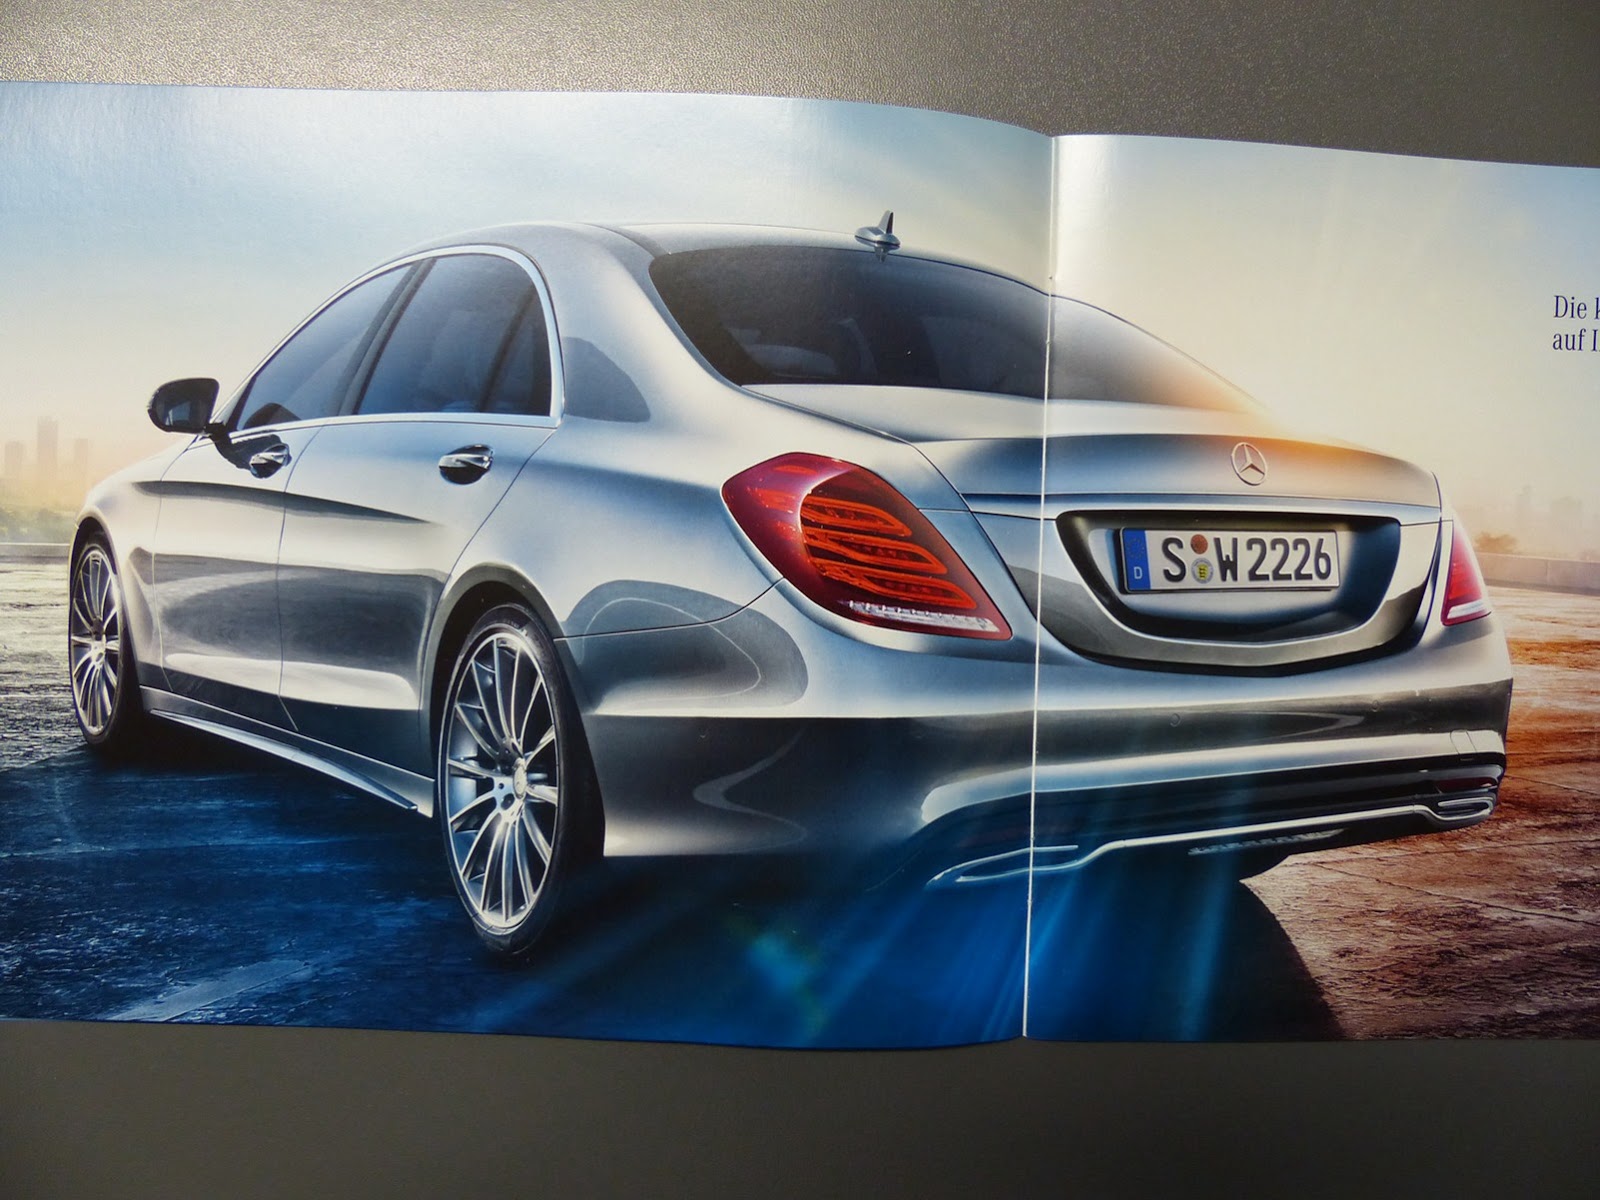 2014-Mercedes-Benz-S-Class-Brochure-Carscoops3%25255B2%25255D.jpg